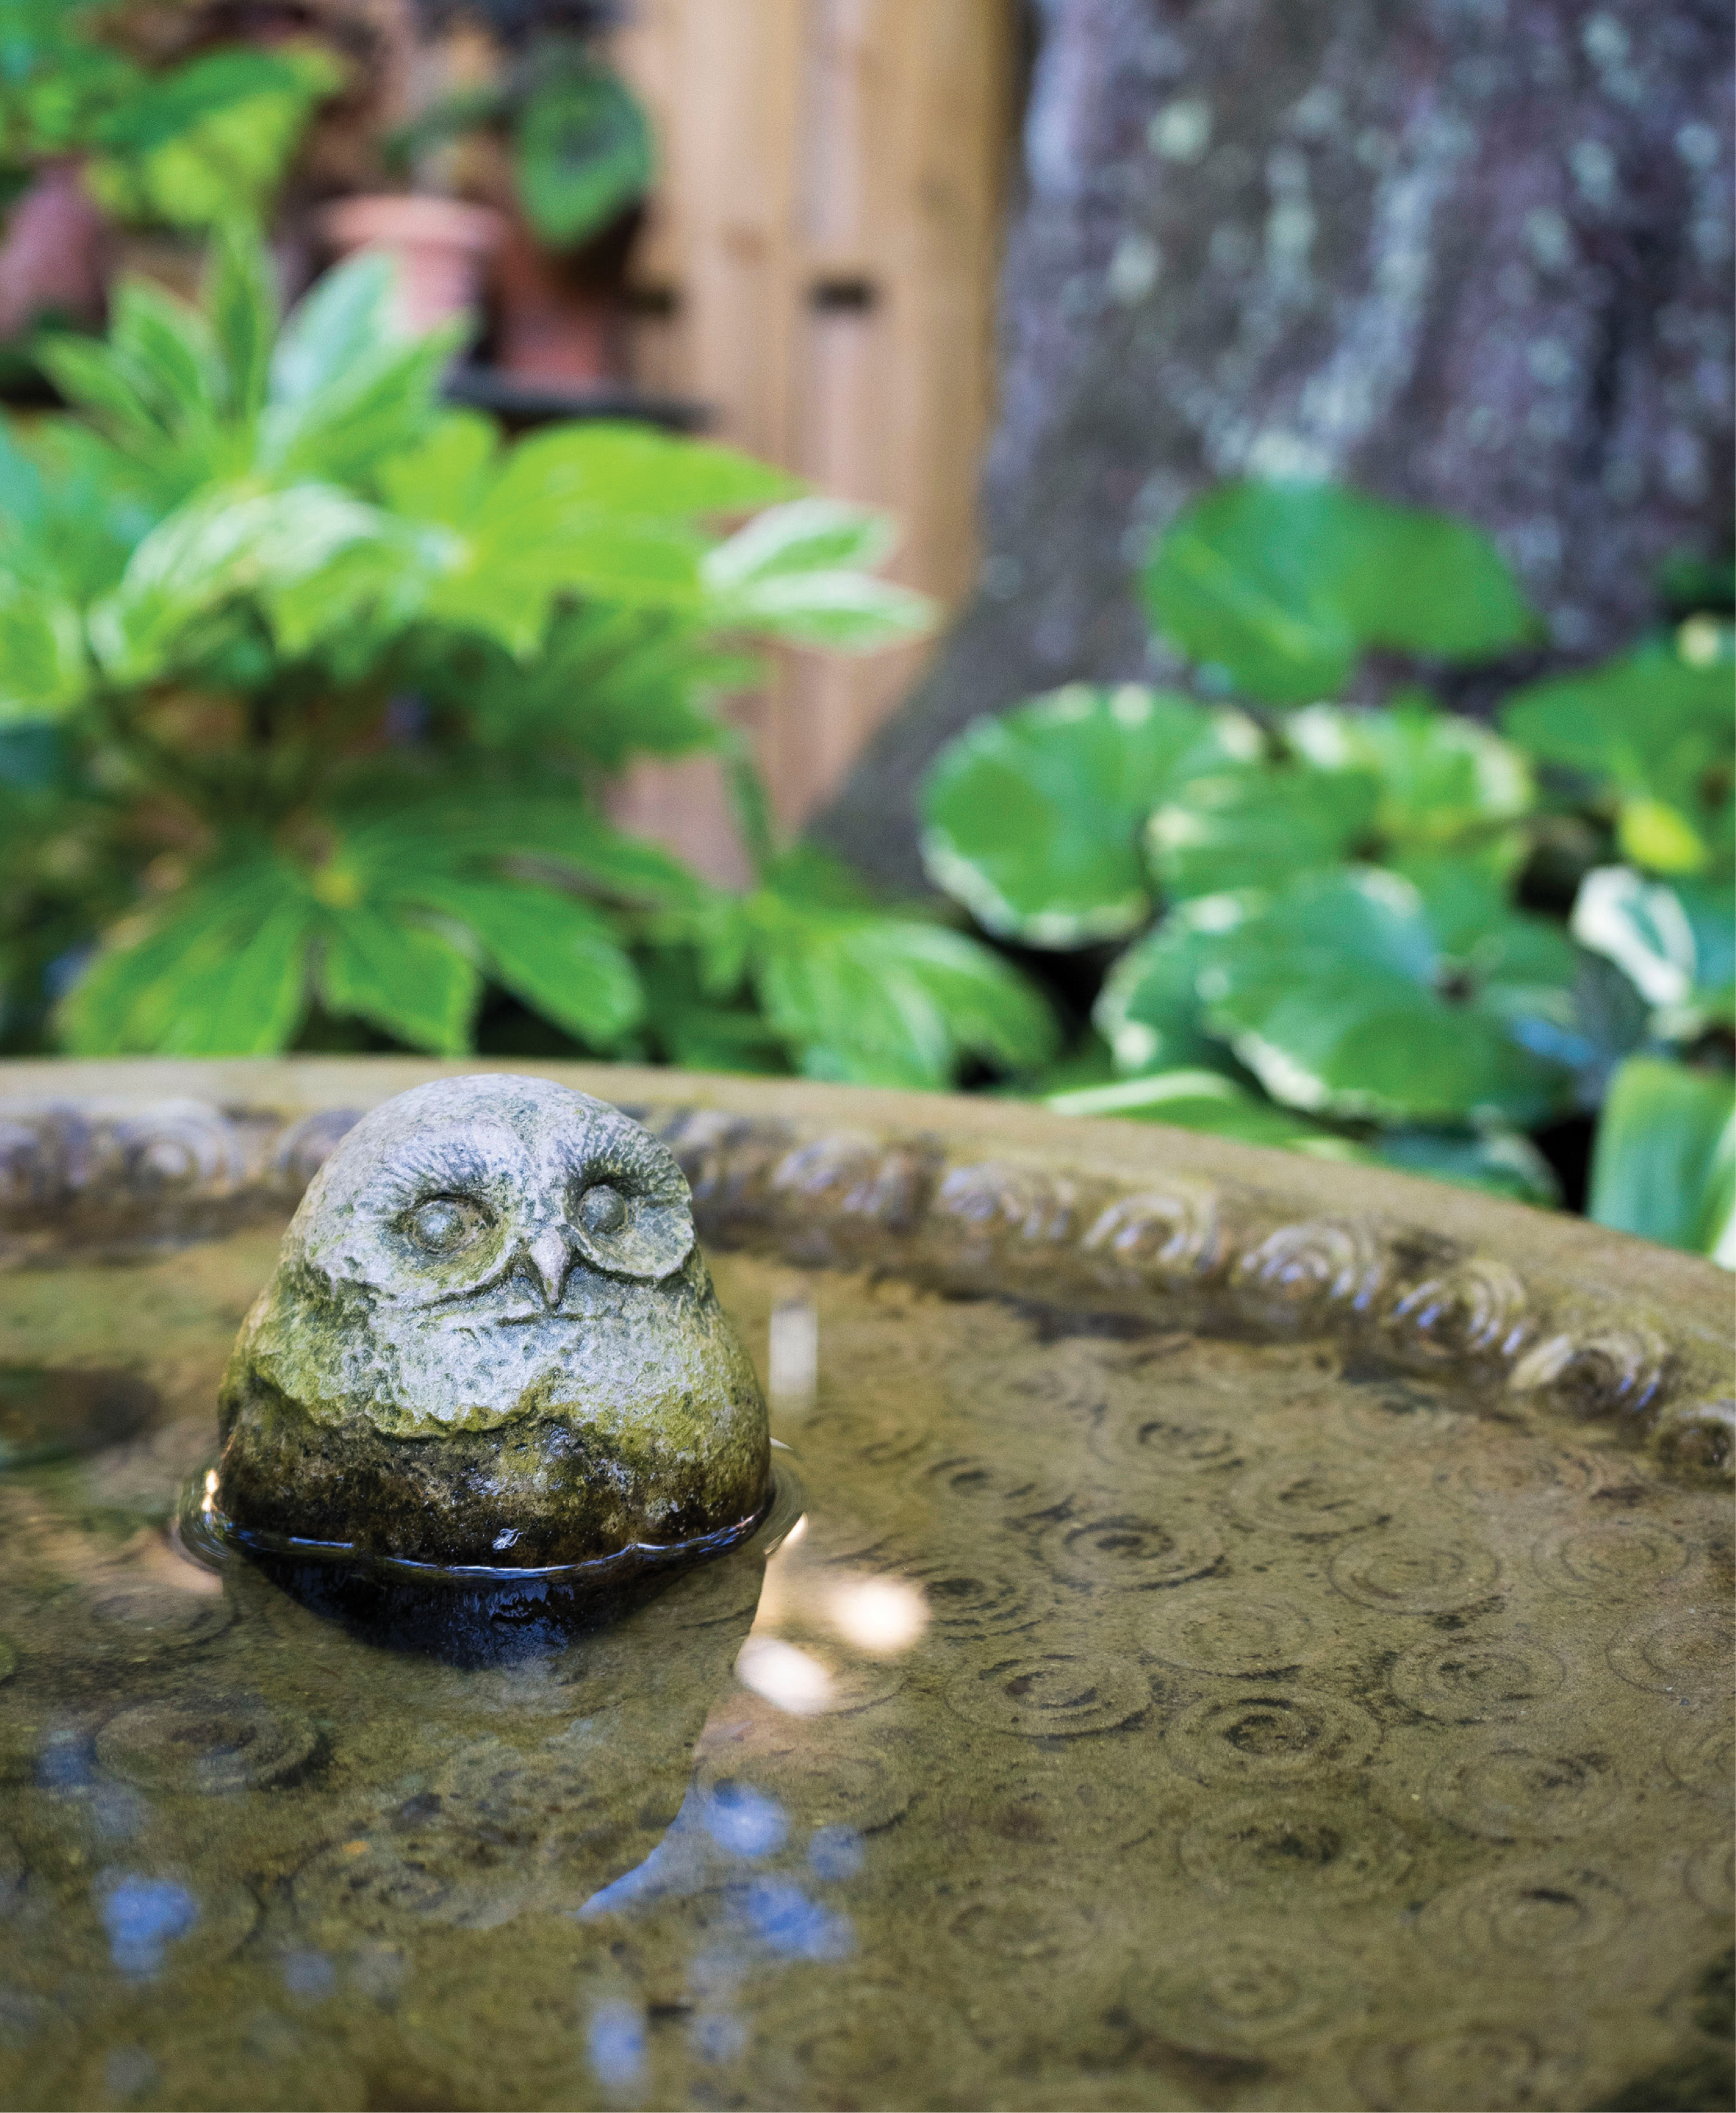 Cool Spot: A stoic owl peers from a birdbath perch.